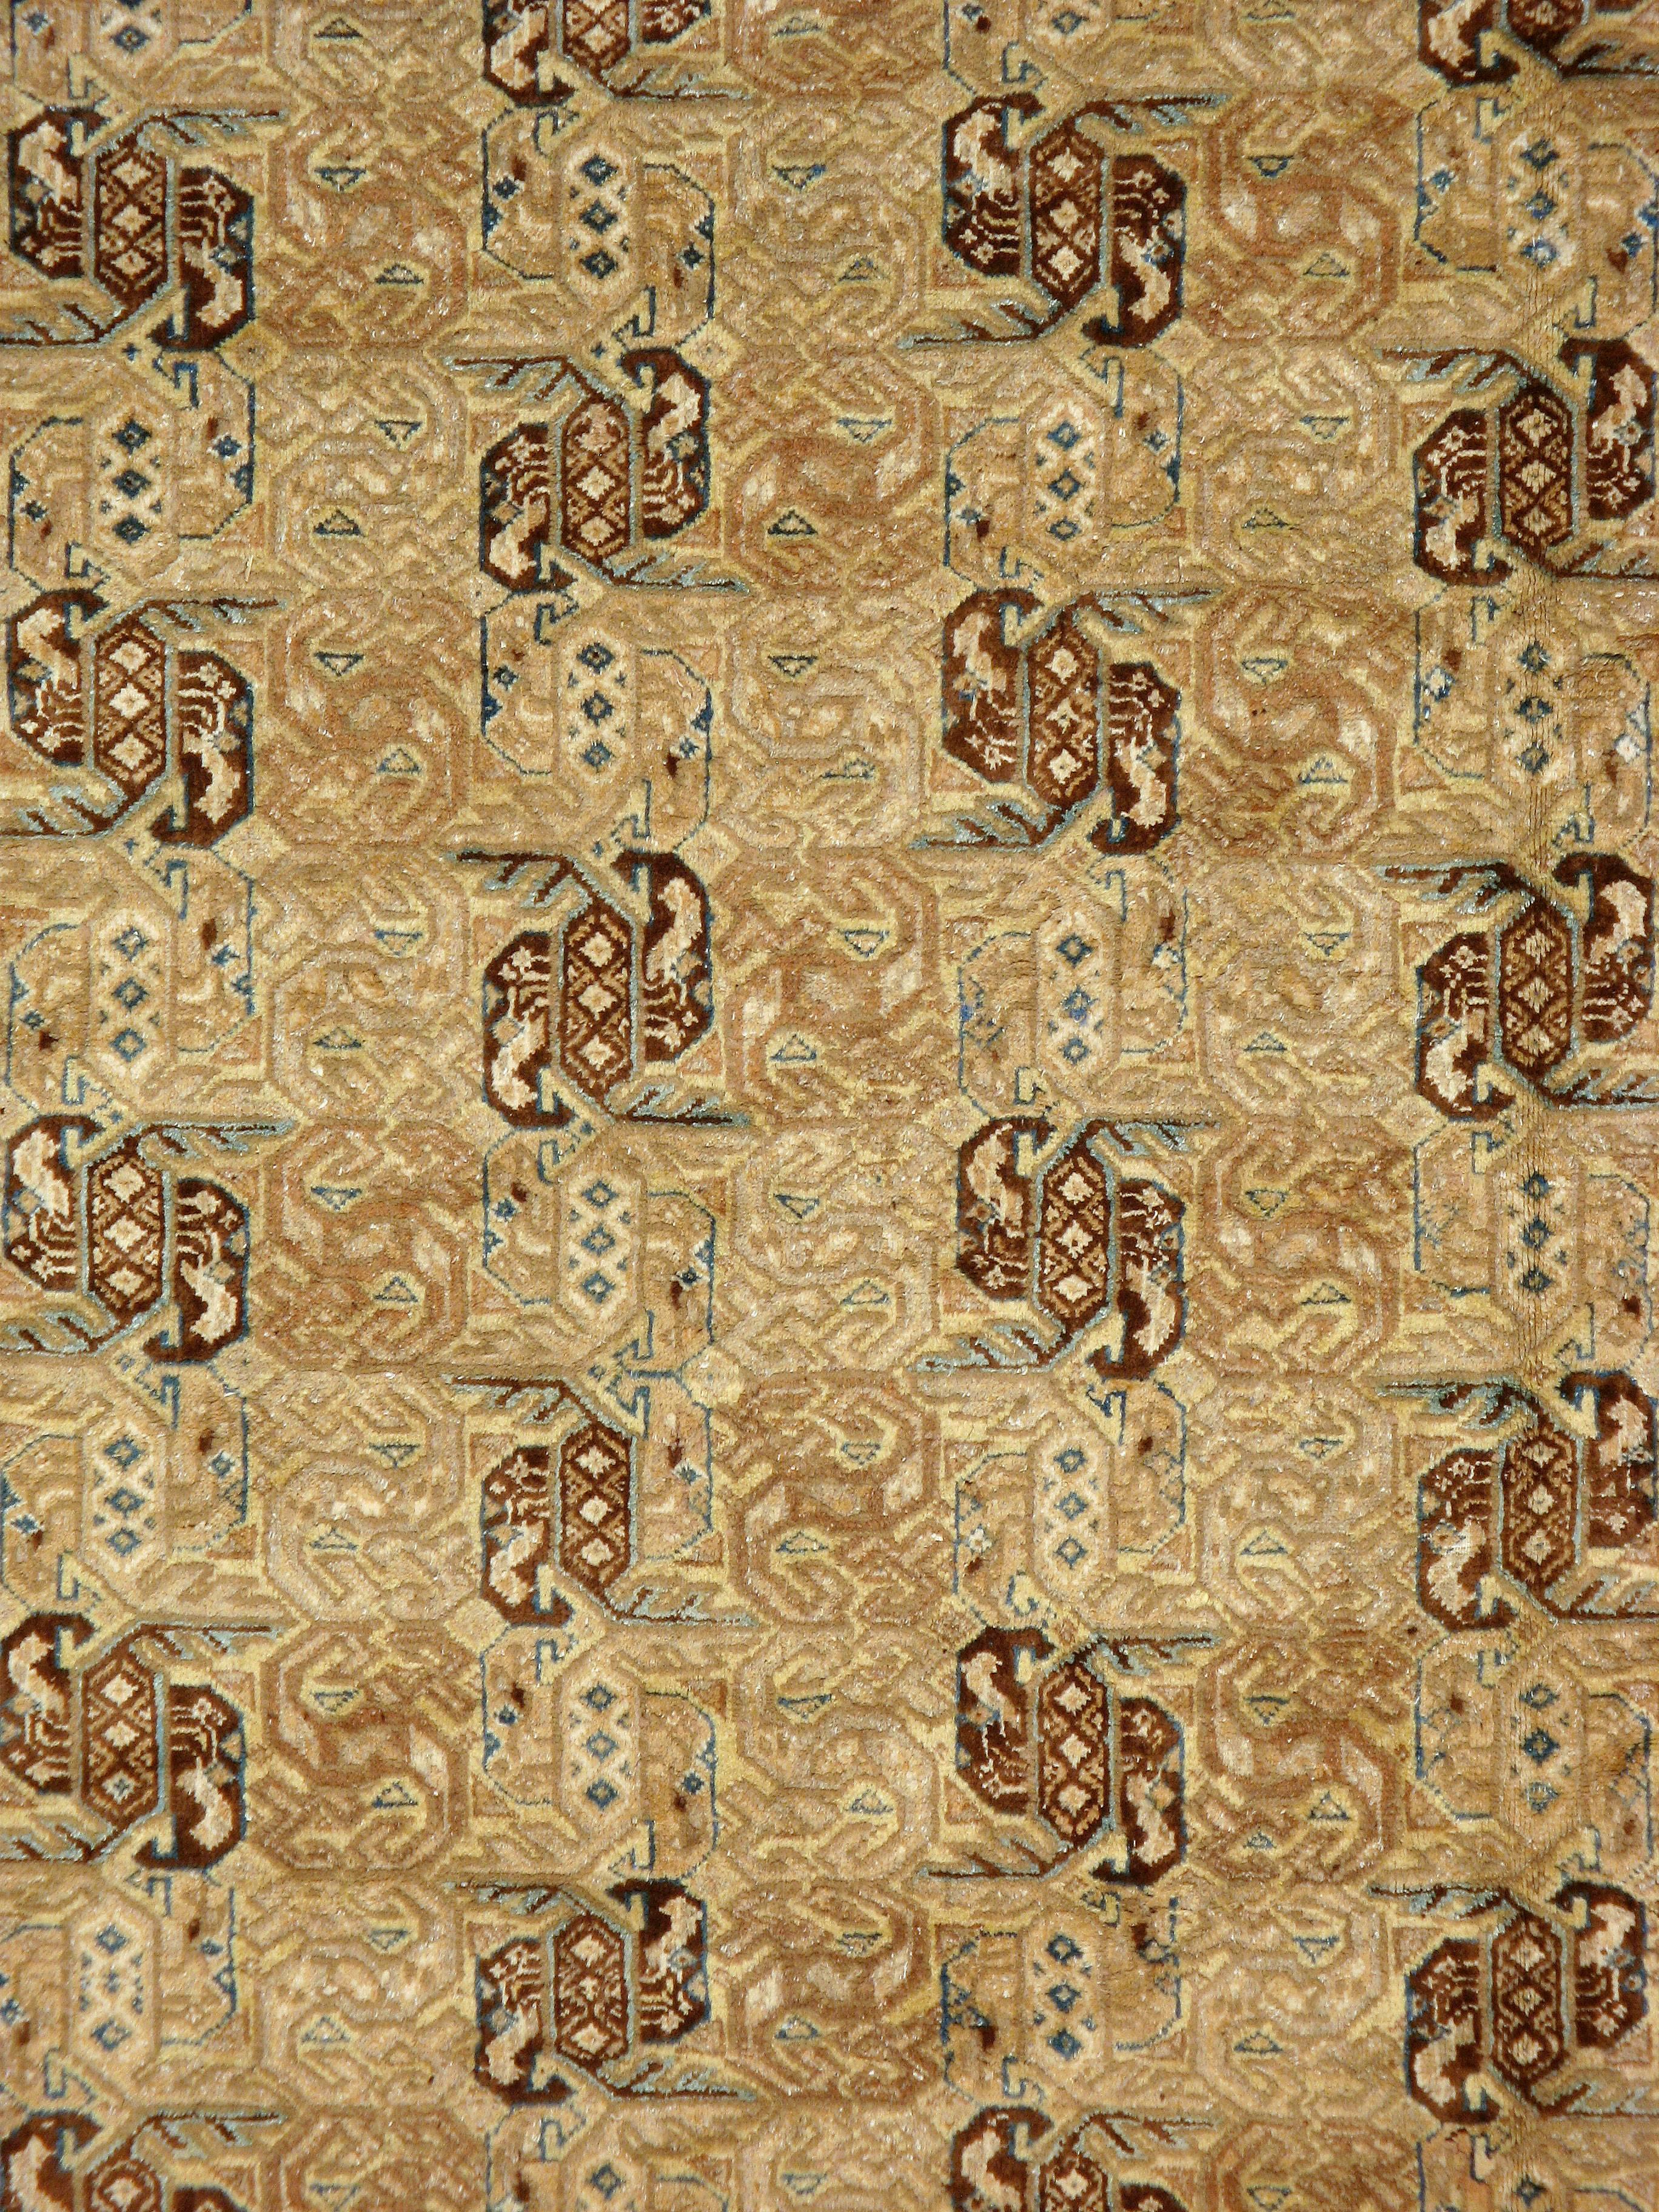 An antique East Turkestan Samarkand Khotan carpet from the first quarter of the 20th century.